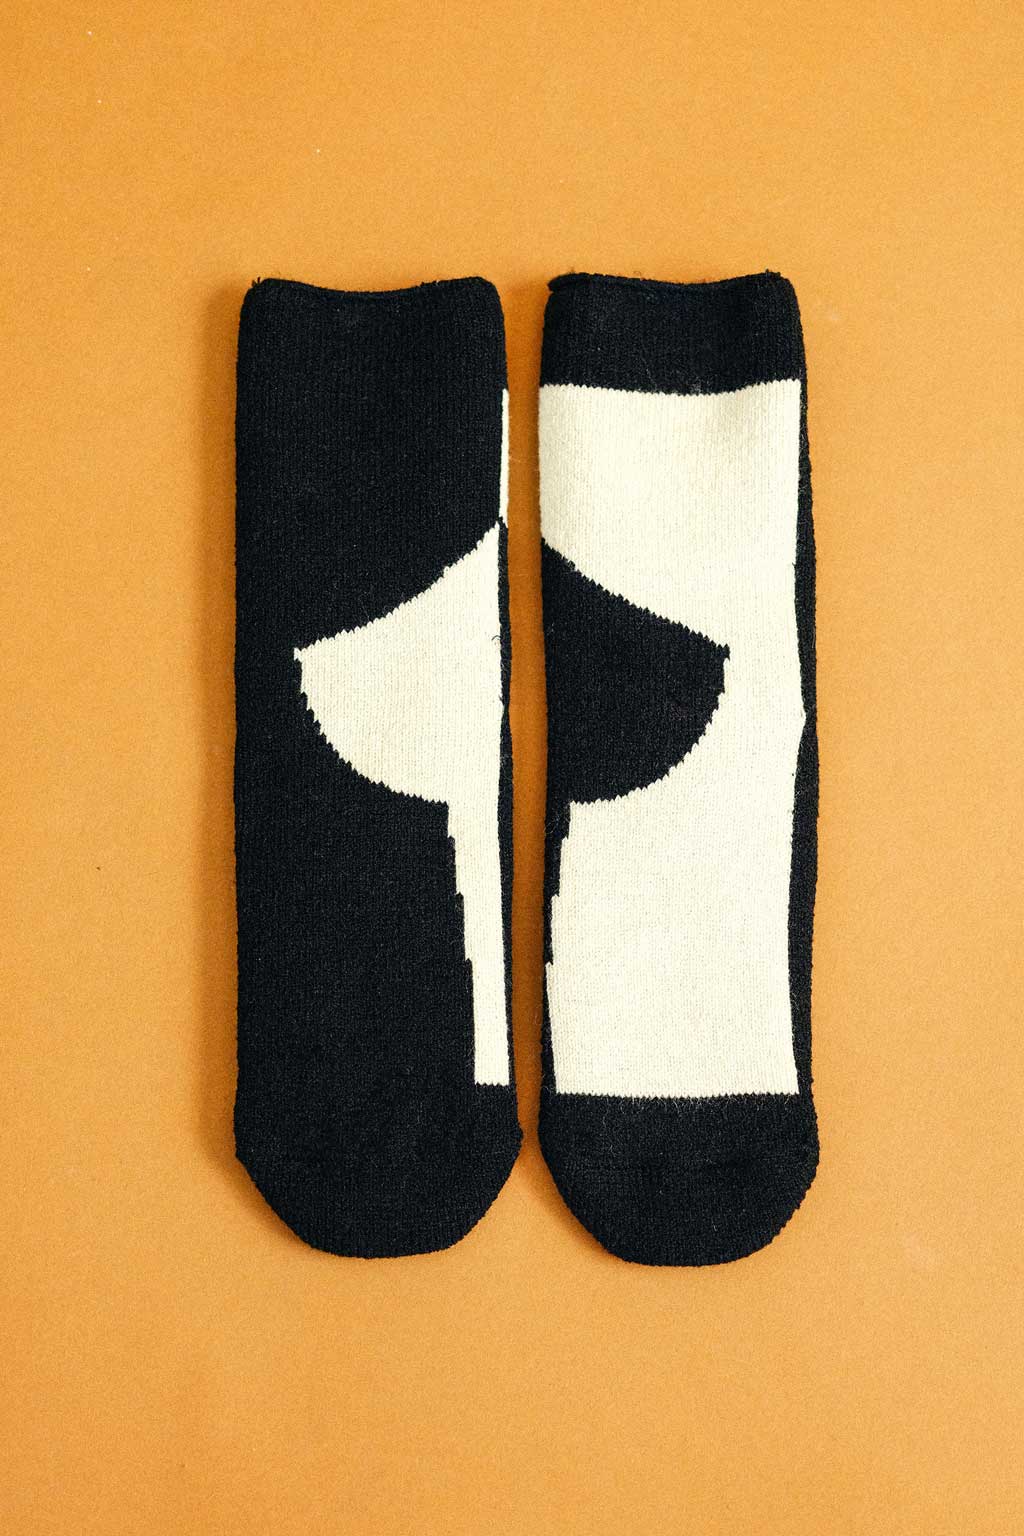 Off White-Black comfiest sock - Tailored Union